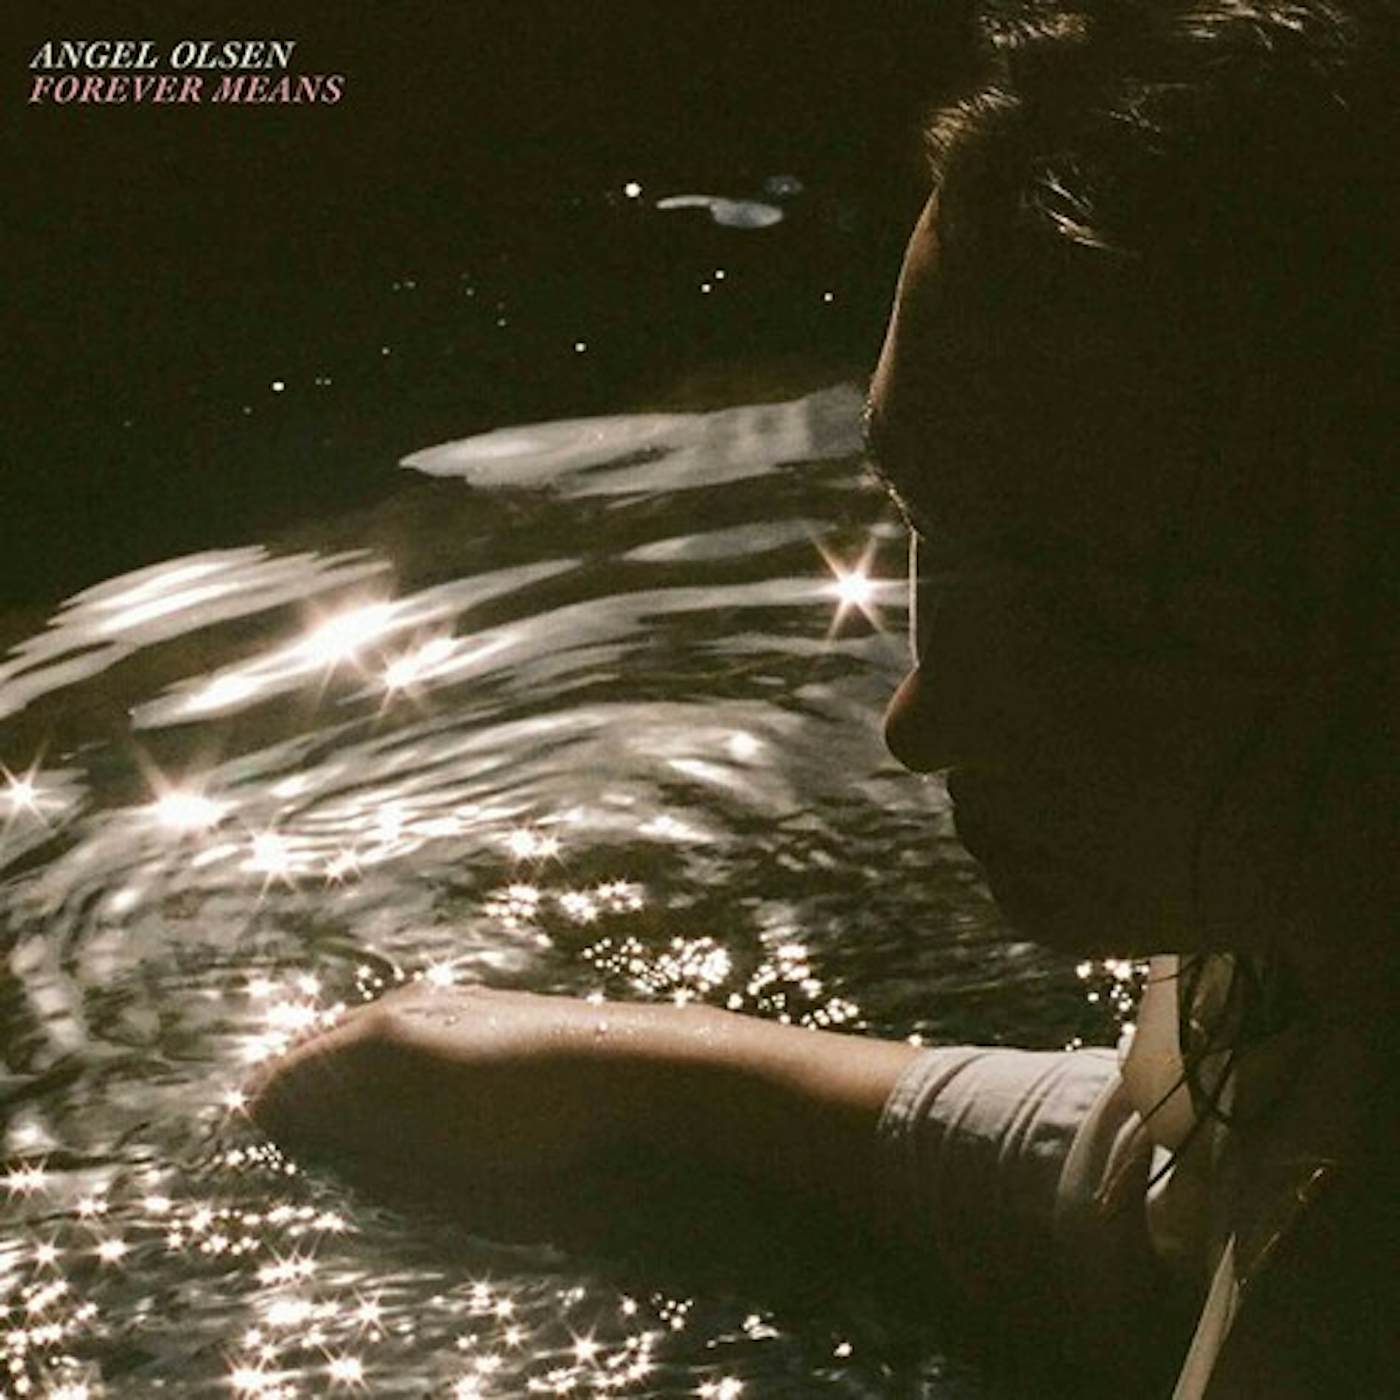 Angel Olsen Forever Means - Baby Pink Vinyl Record